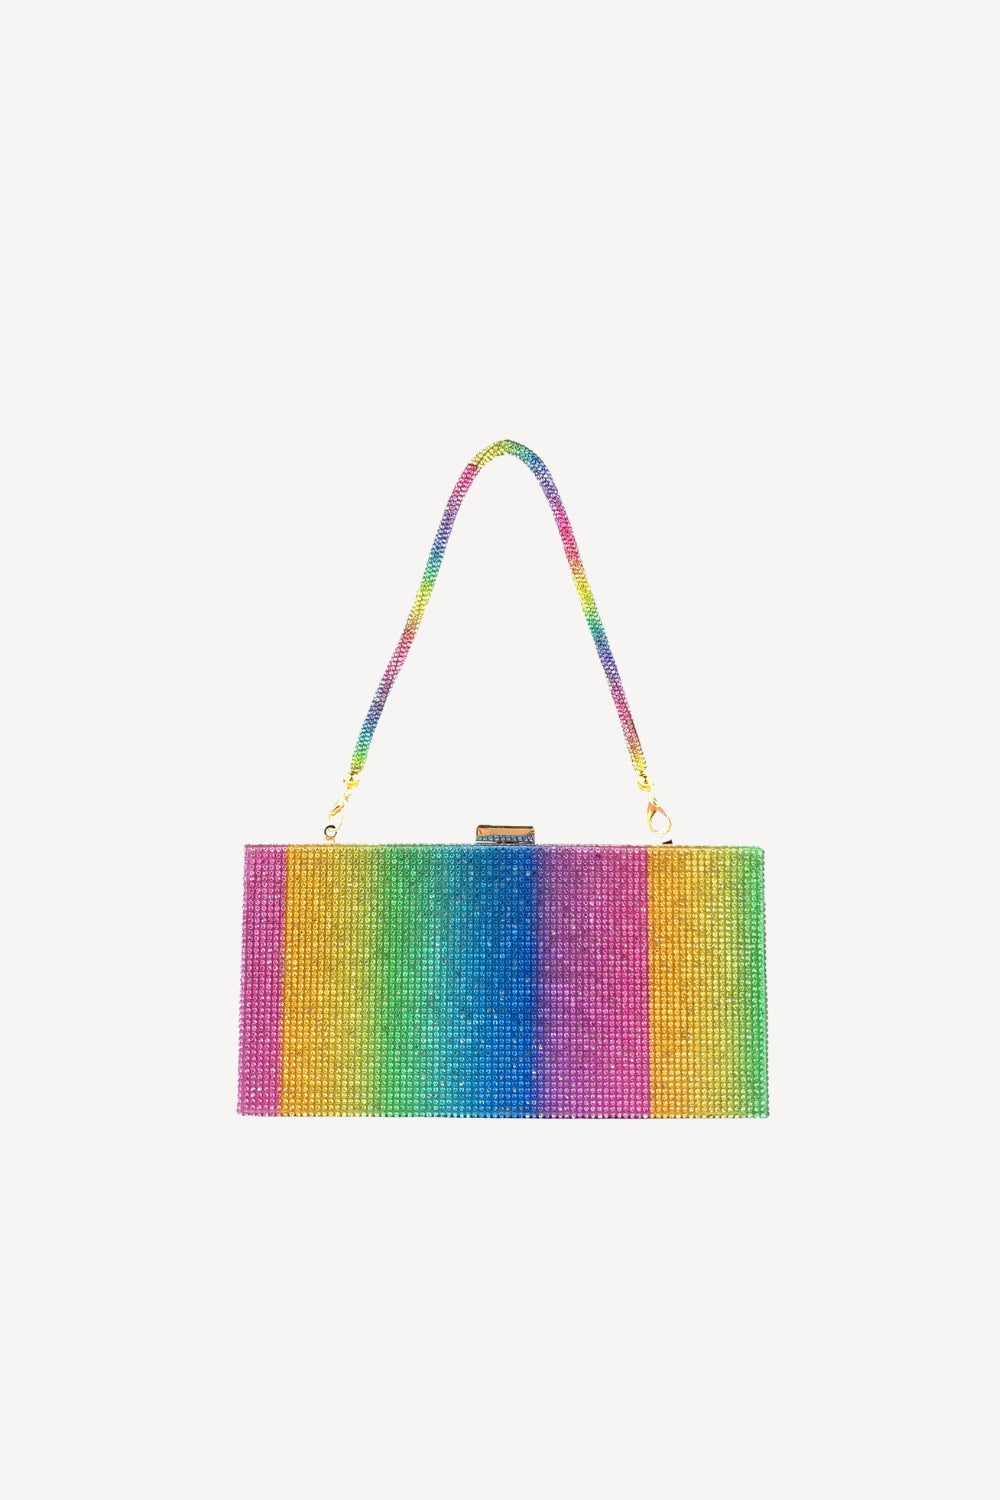 Sparkly Rainbow Rhinestone Evening Party Handbag